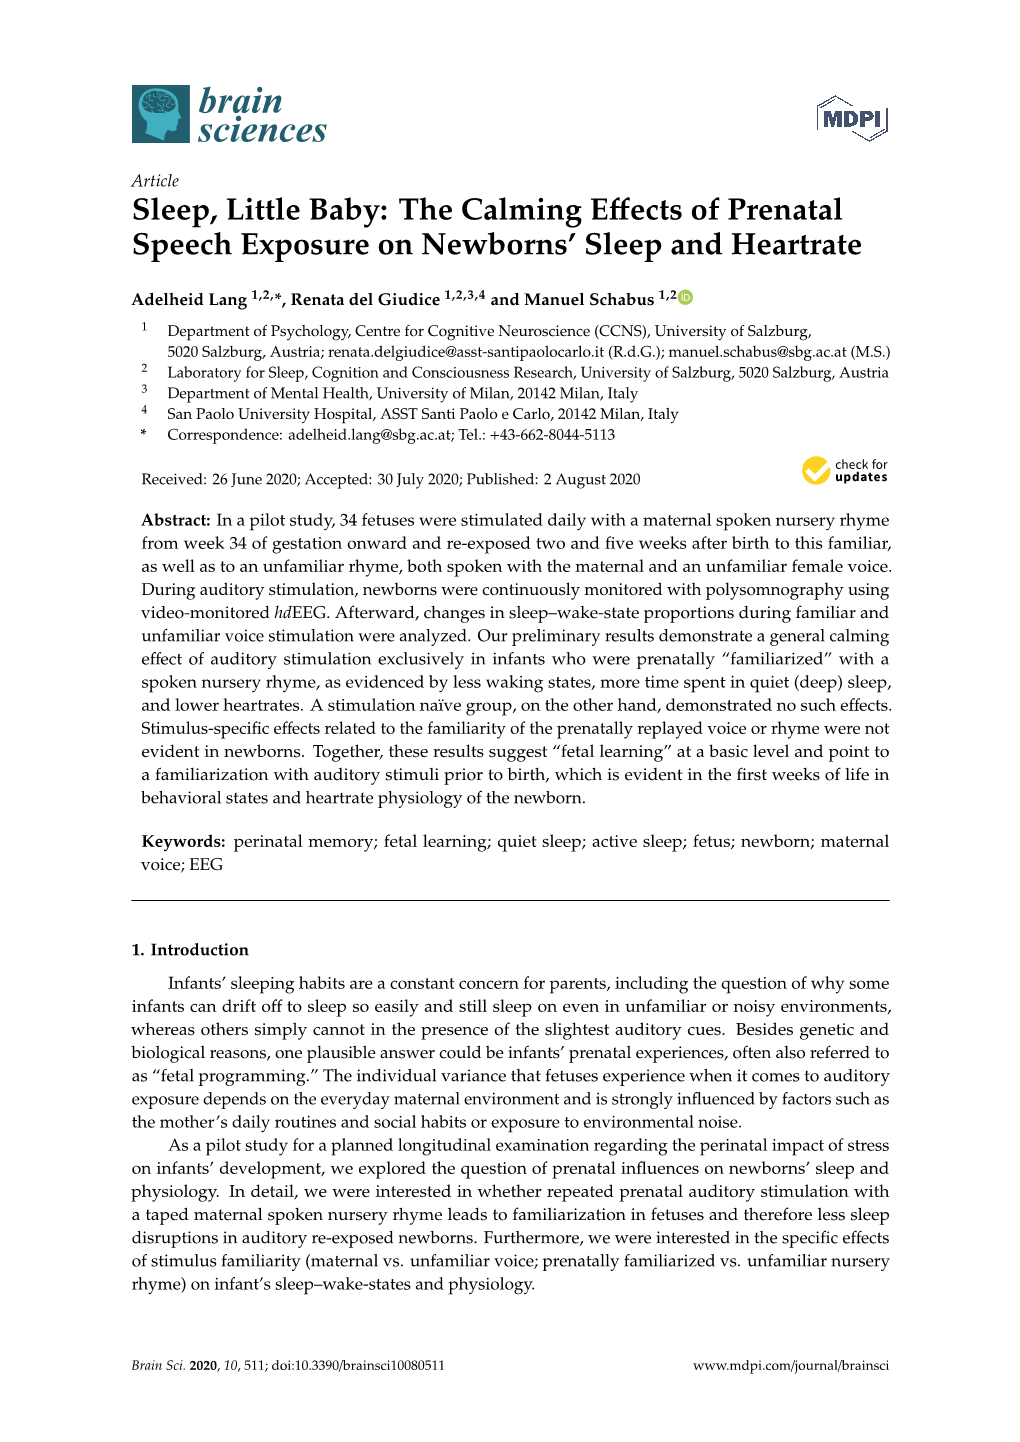 Sleep, Little Baby: the Calming Effects of Prenatal Speech